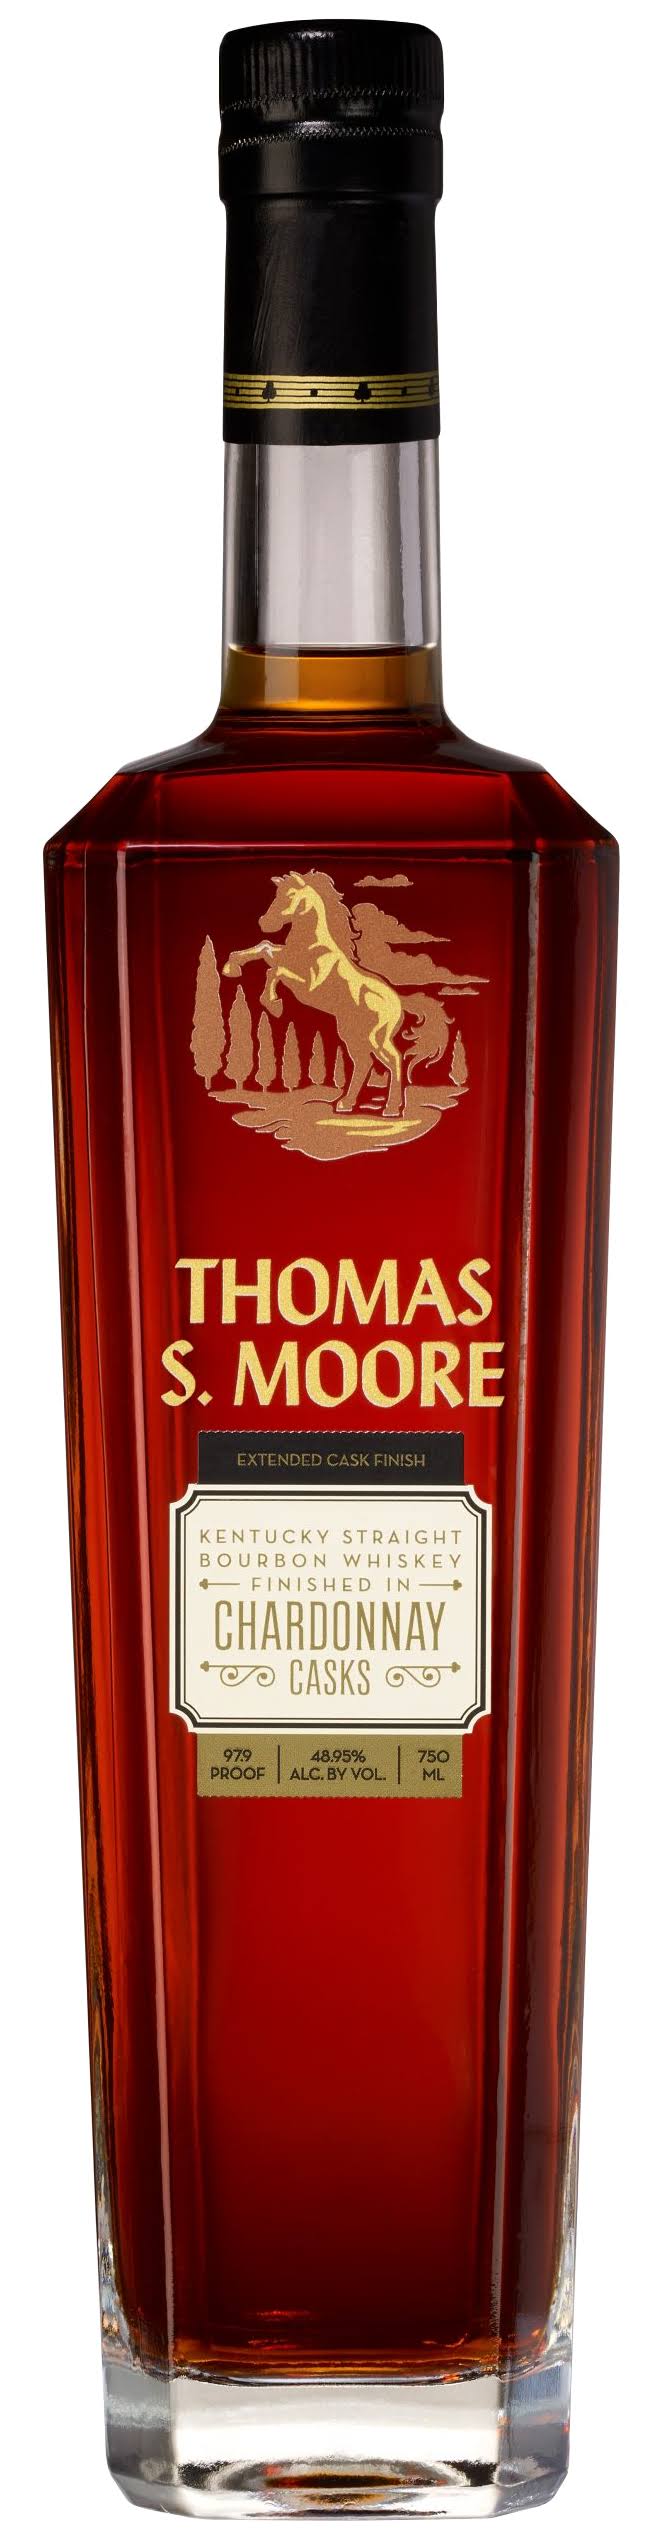 Thomas S. Moore Chardonnay Cask Finish Bourbon Whiskey - 750ml